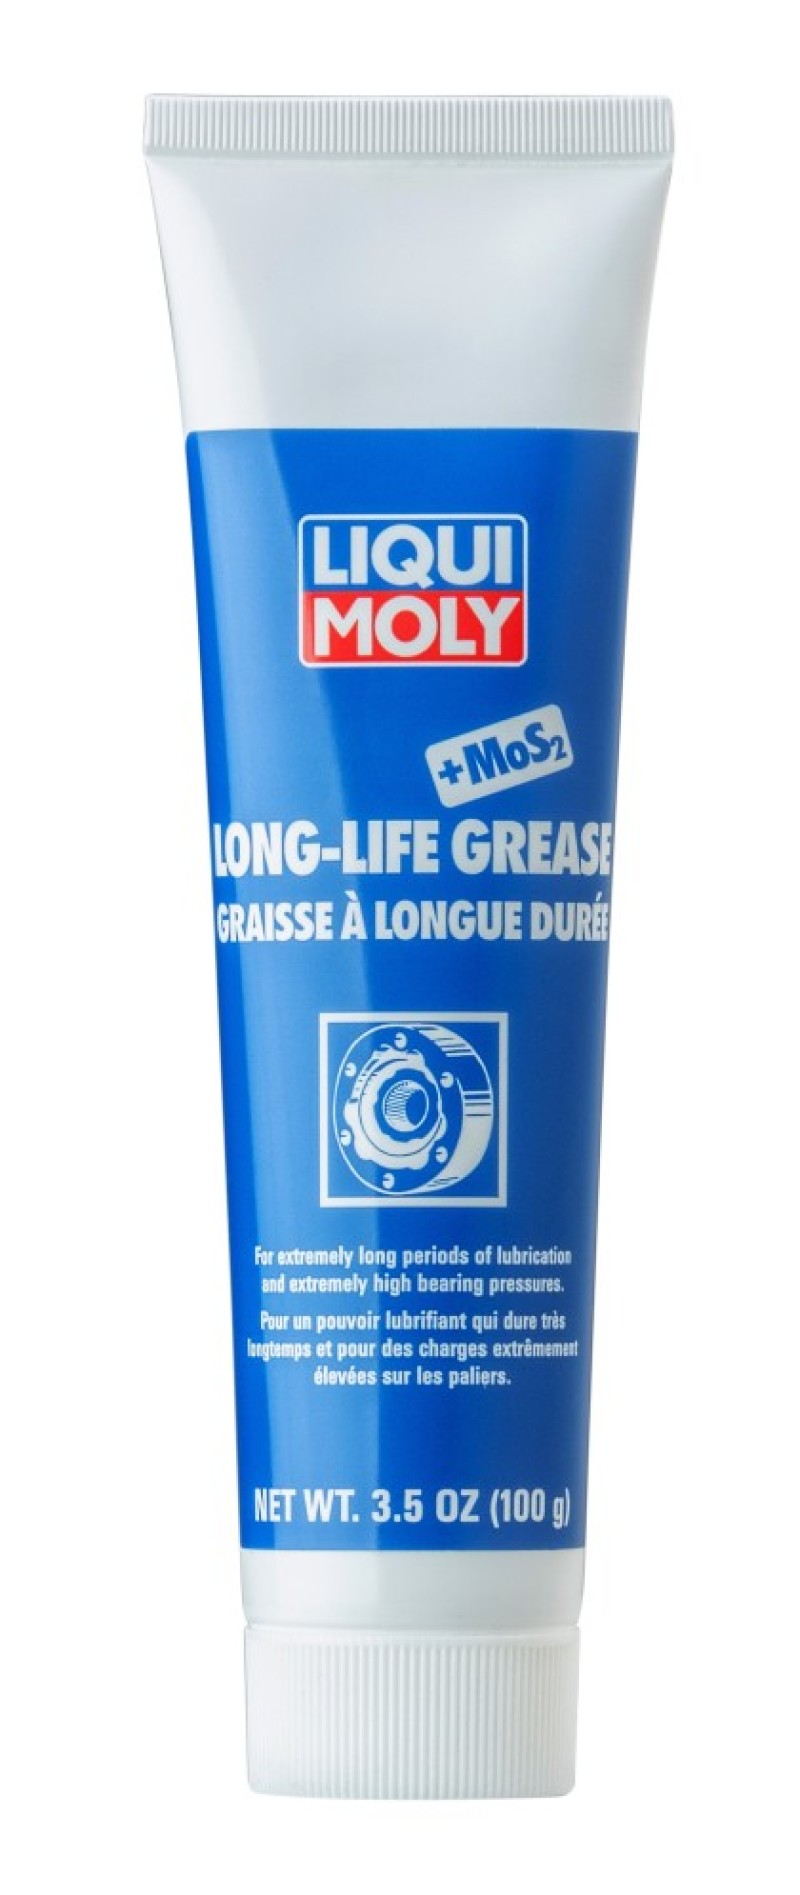 LIQUI MOLY Long-Life Grease + MoS2 - Single.